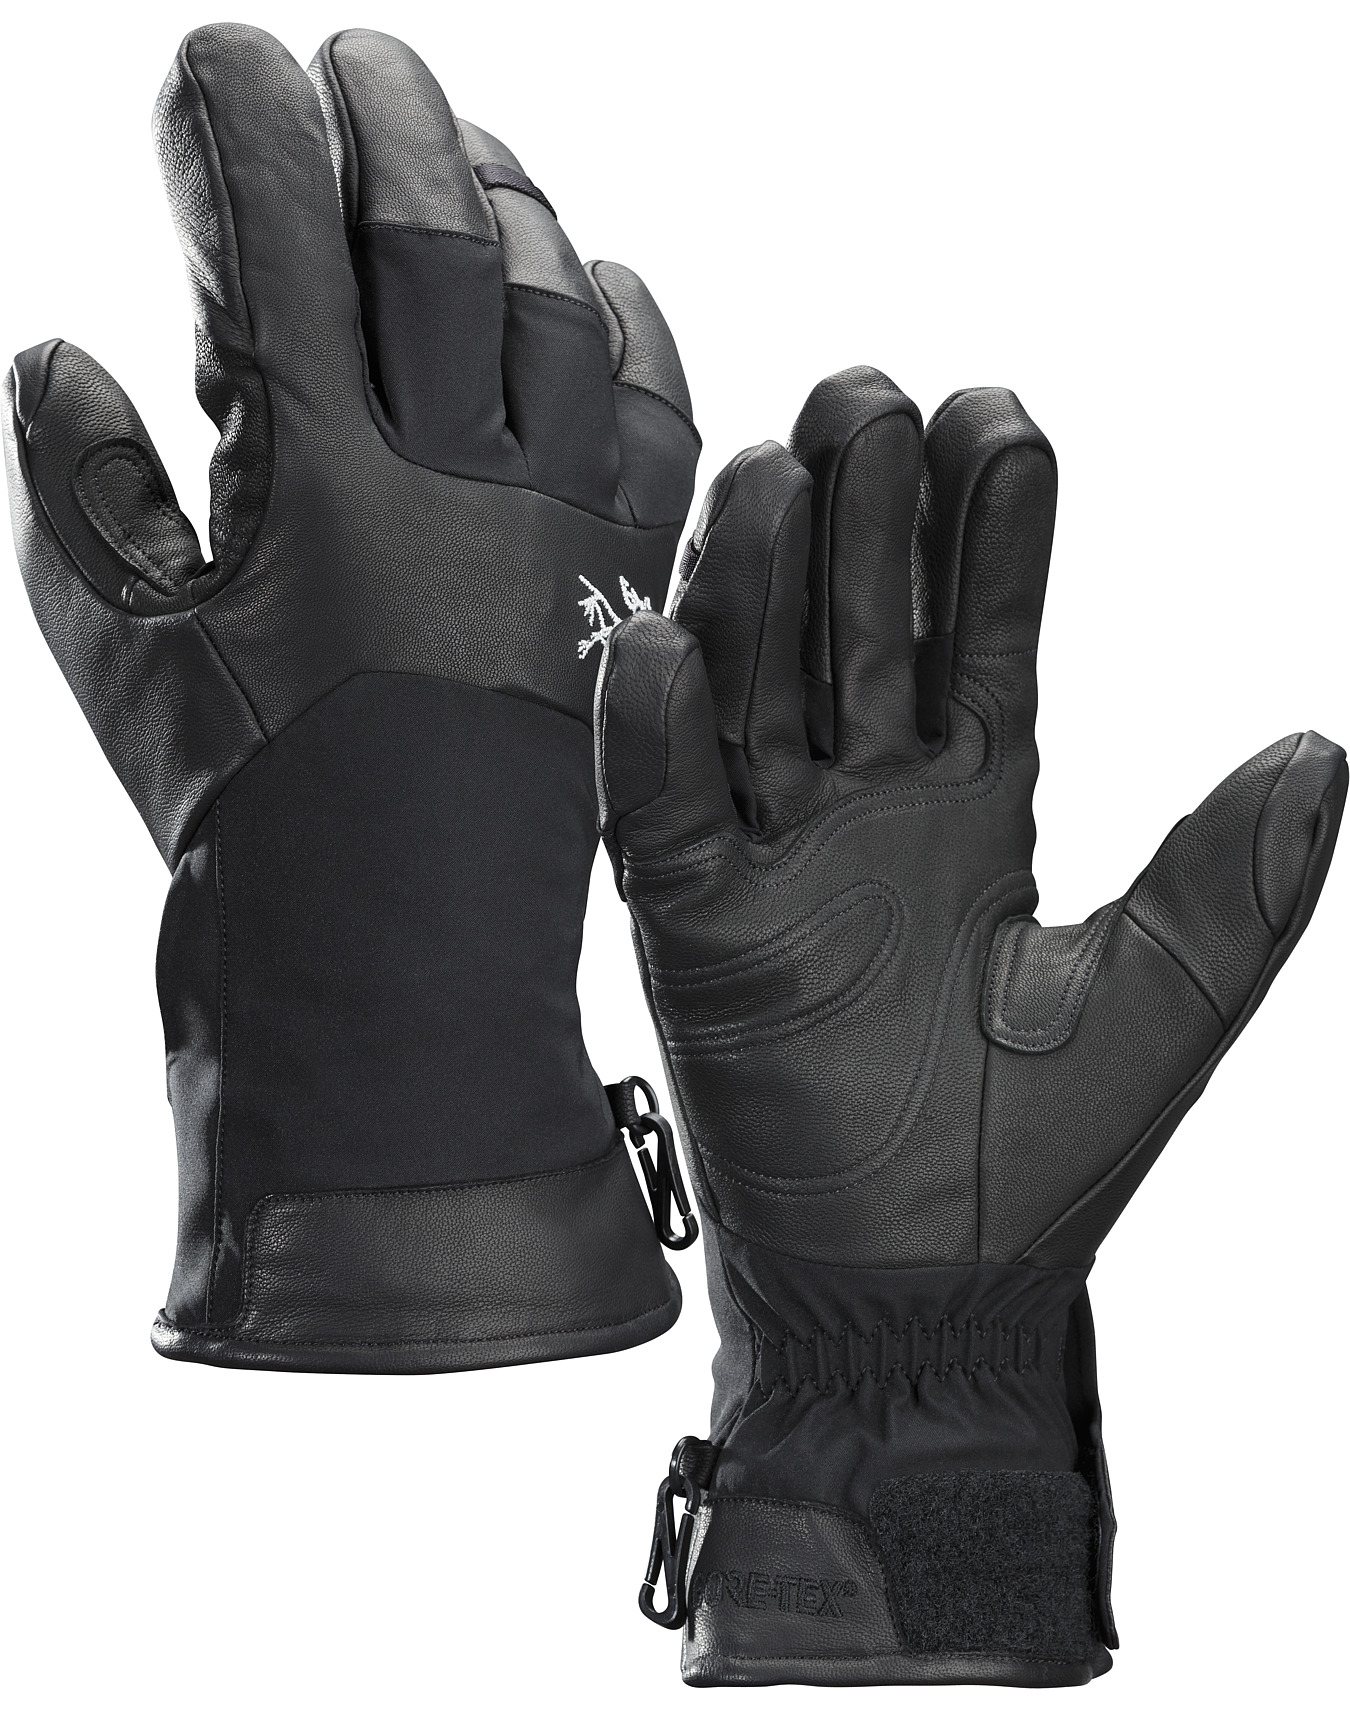 Arc'teryx Sabre gloves.jpg